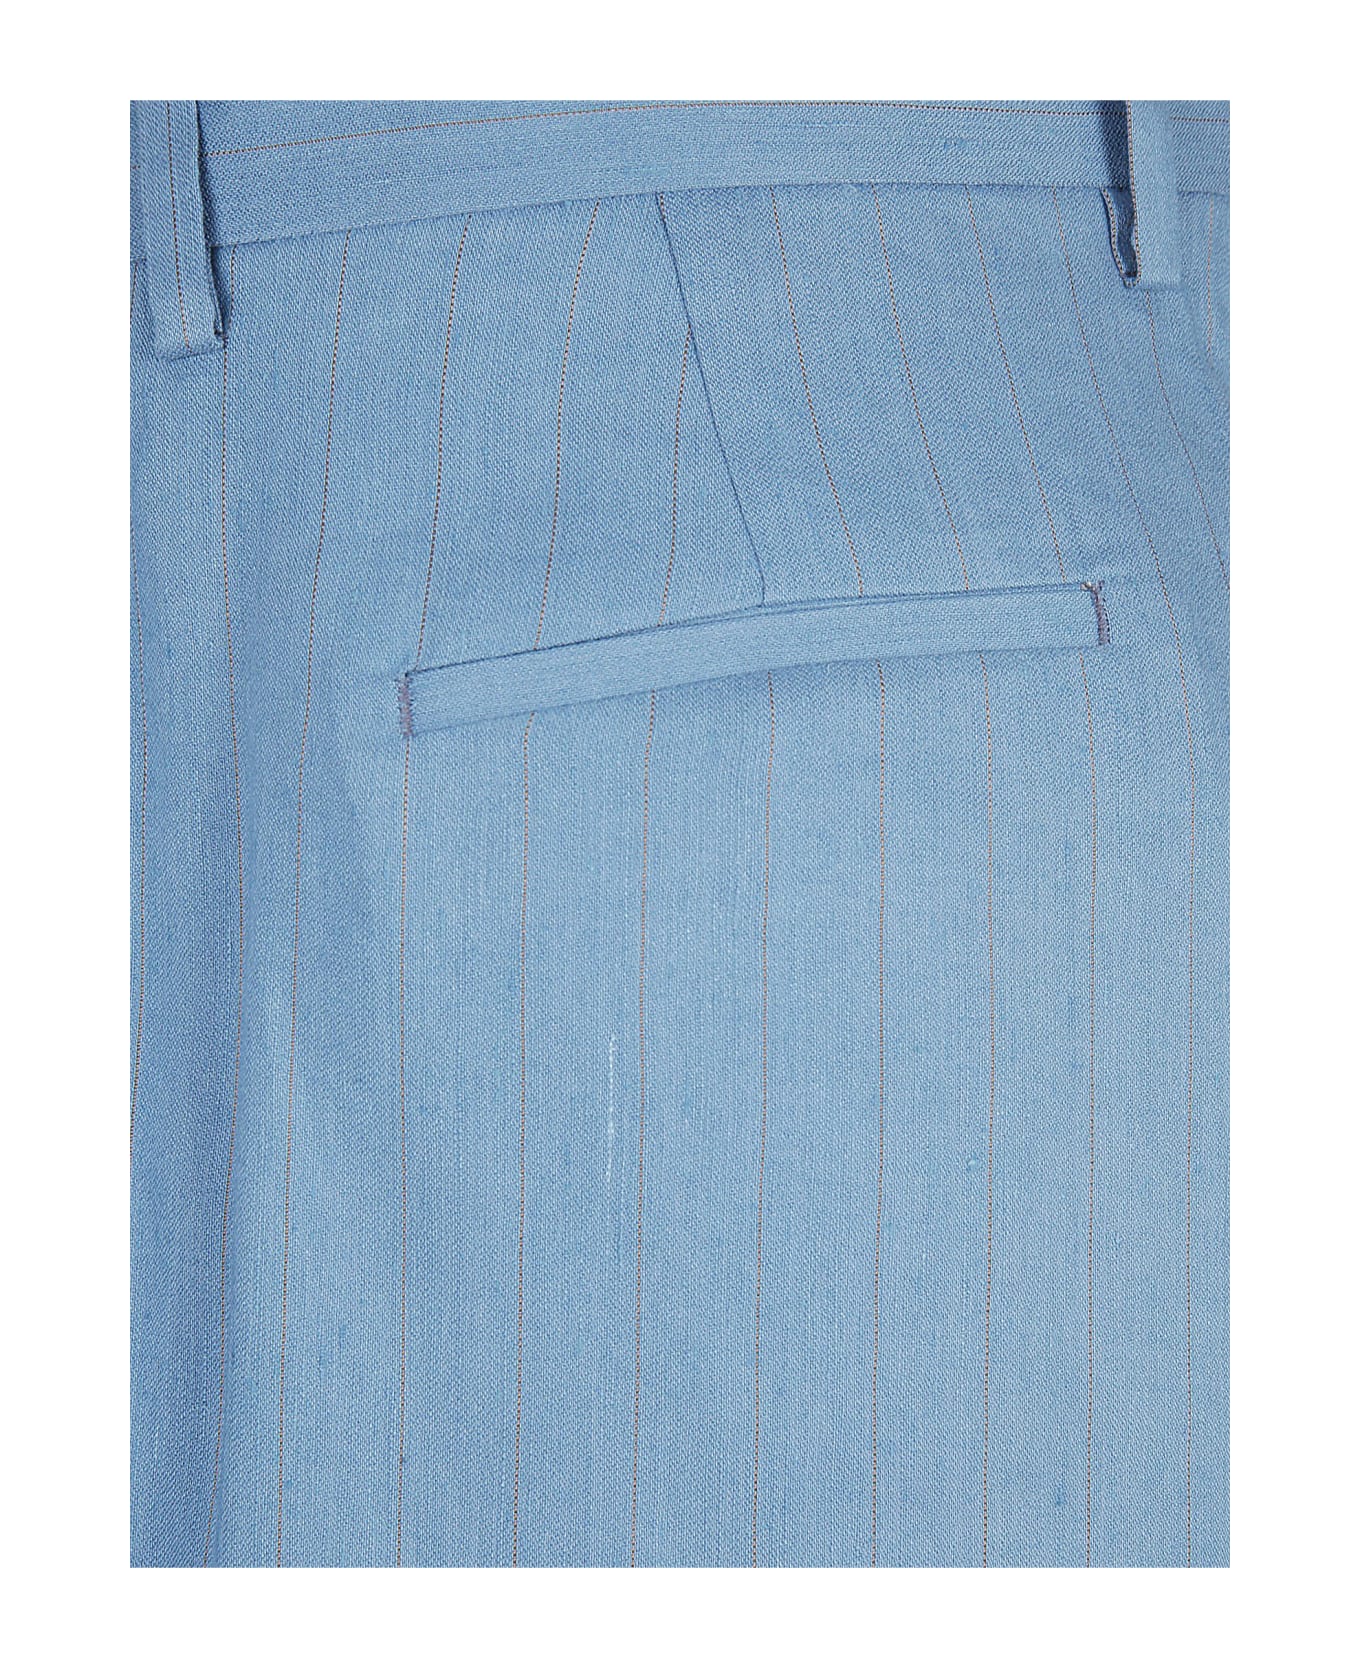 Saulina Milano Saulina Trousers Clear Blue - Clear Blue